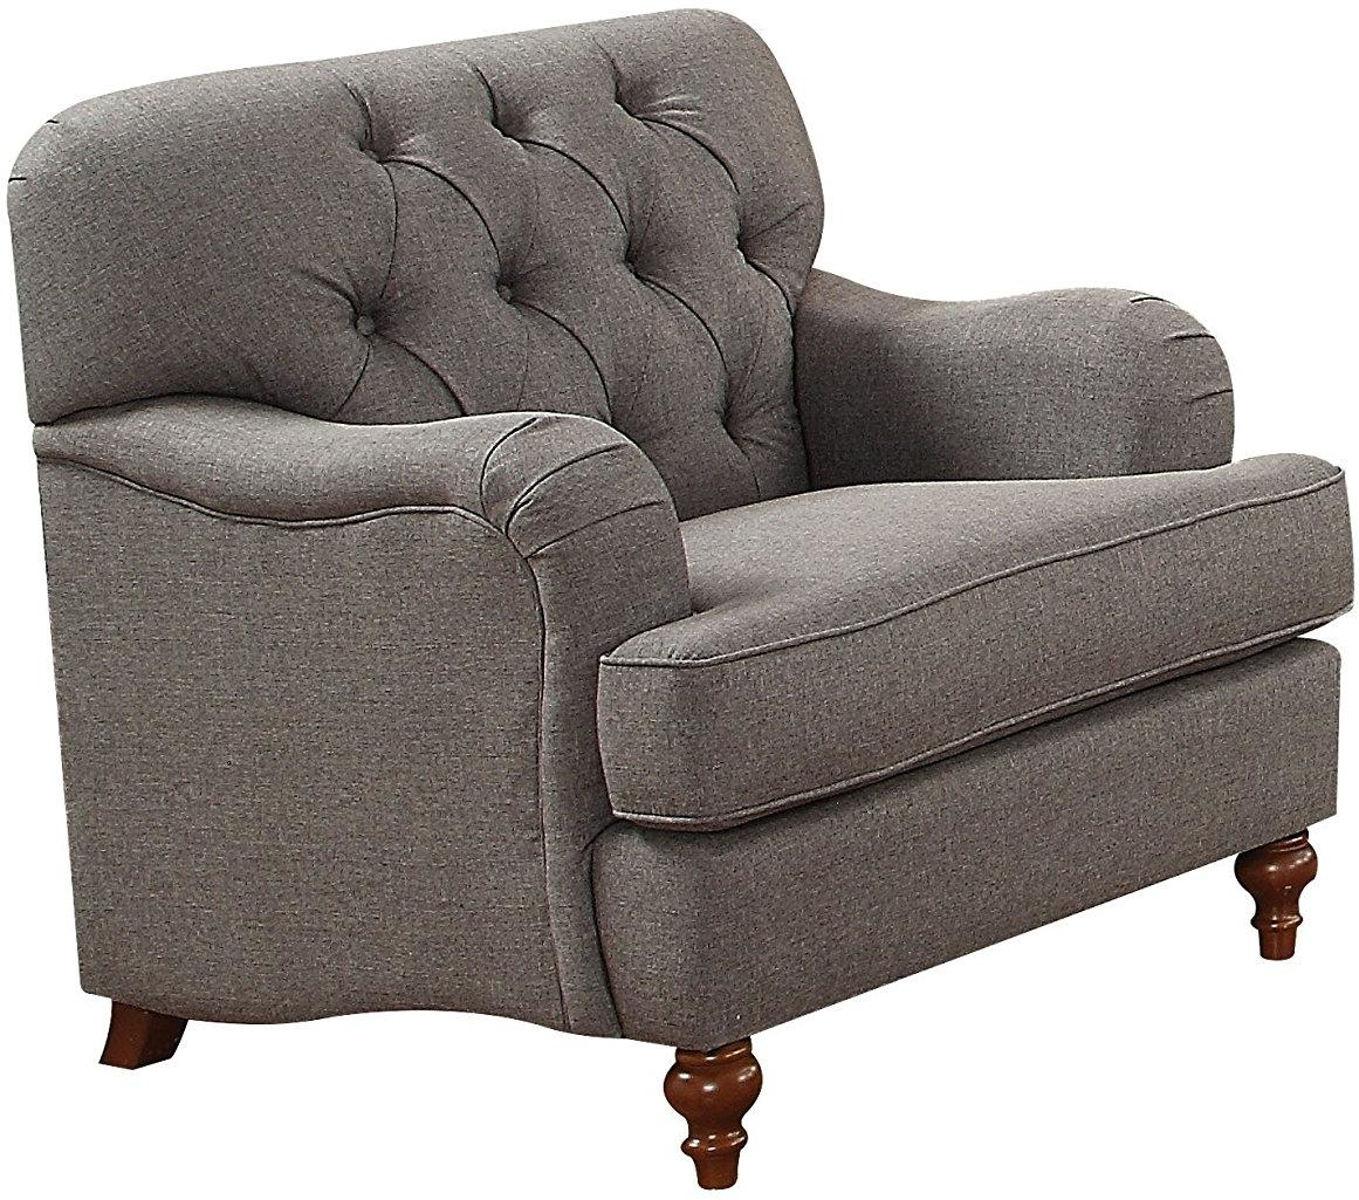 Acme Furniture Alianza Chair in Dark Gray 53692  Half Price Furniture